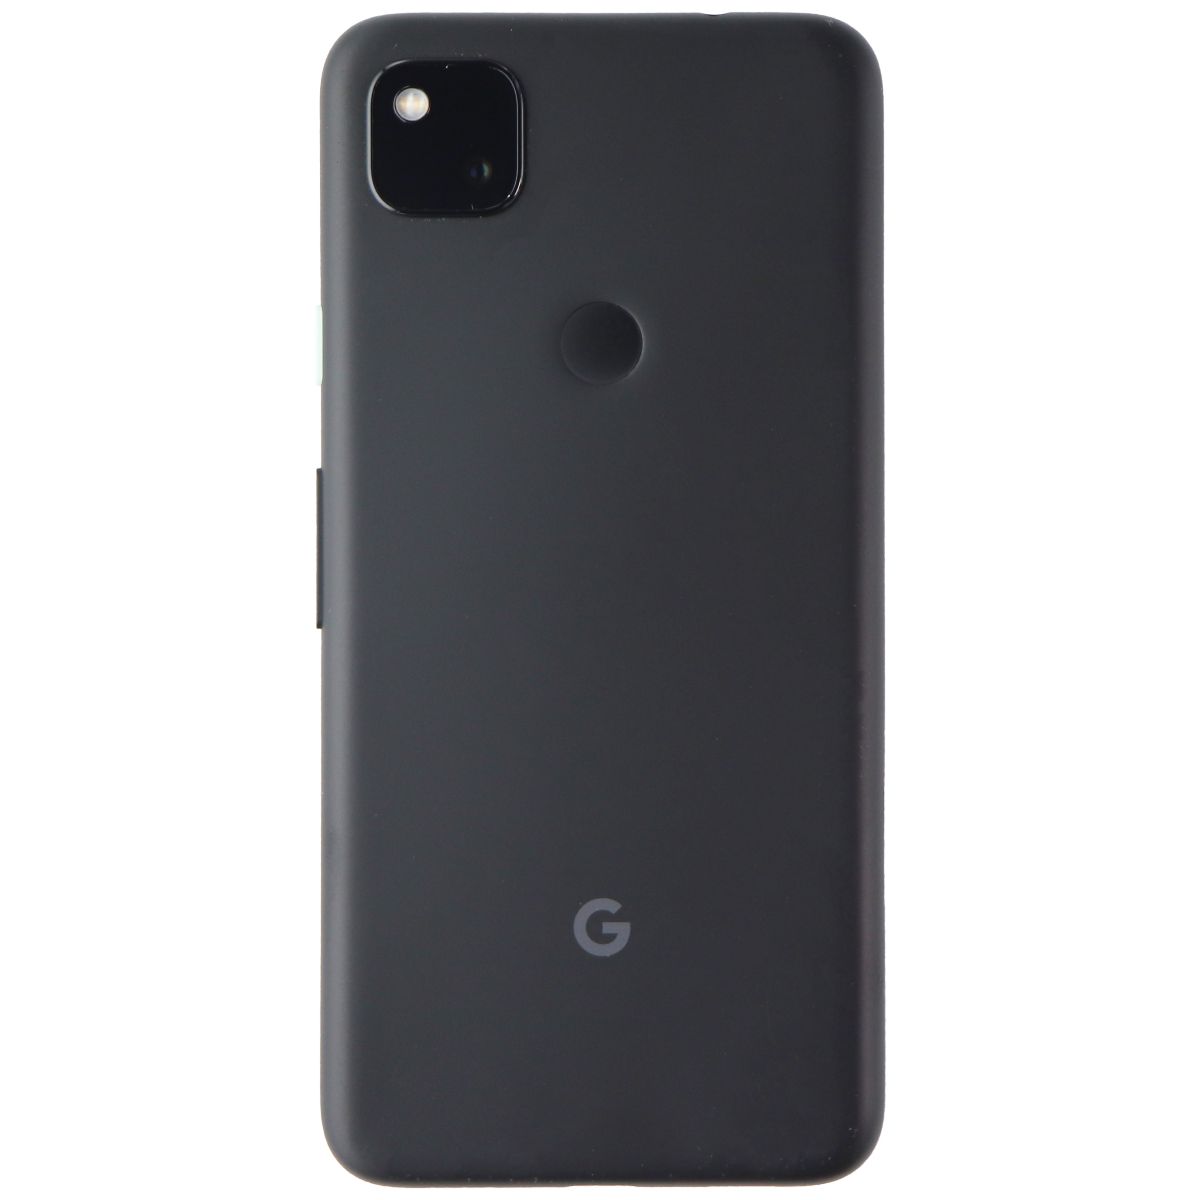 Google Pixel 4a (5.8-inch) 4G LTE Smartphone (G025J) Verizon - 128GB/Black Cell Phones & Smartphones Google    - Simple Cell Bulk Wholesale Pricing - USA Seller